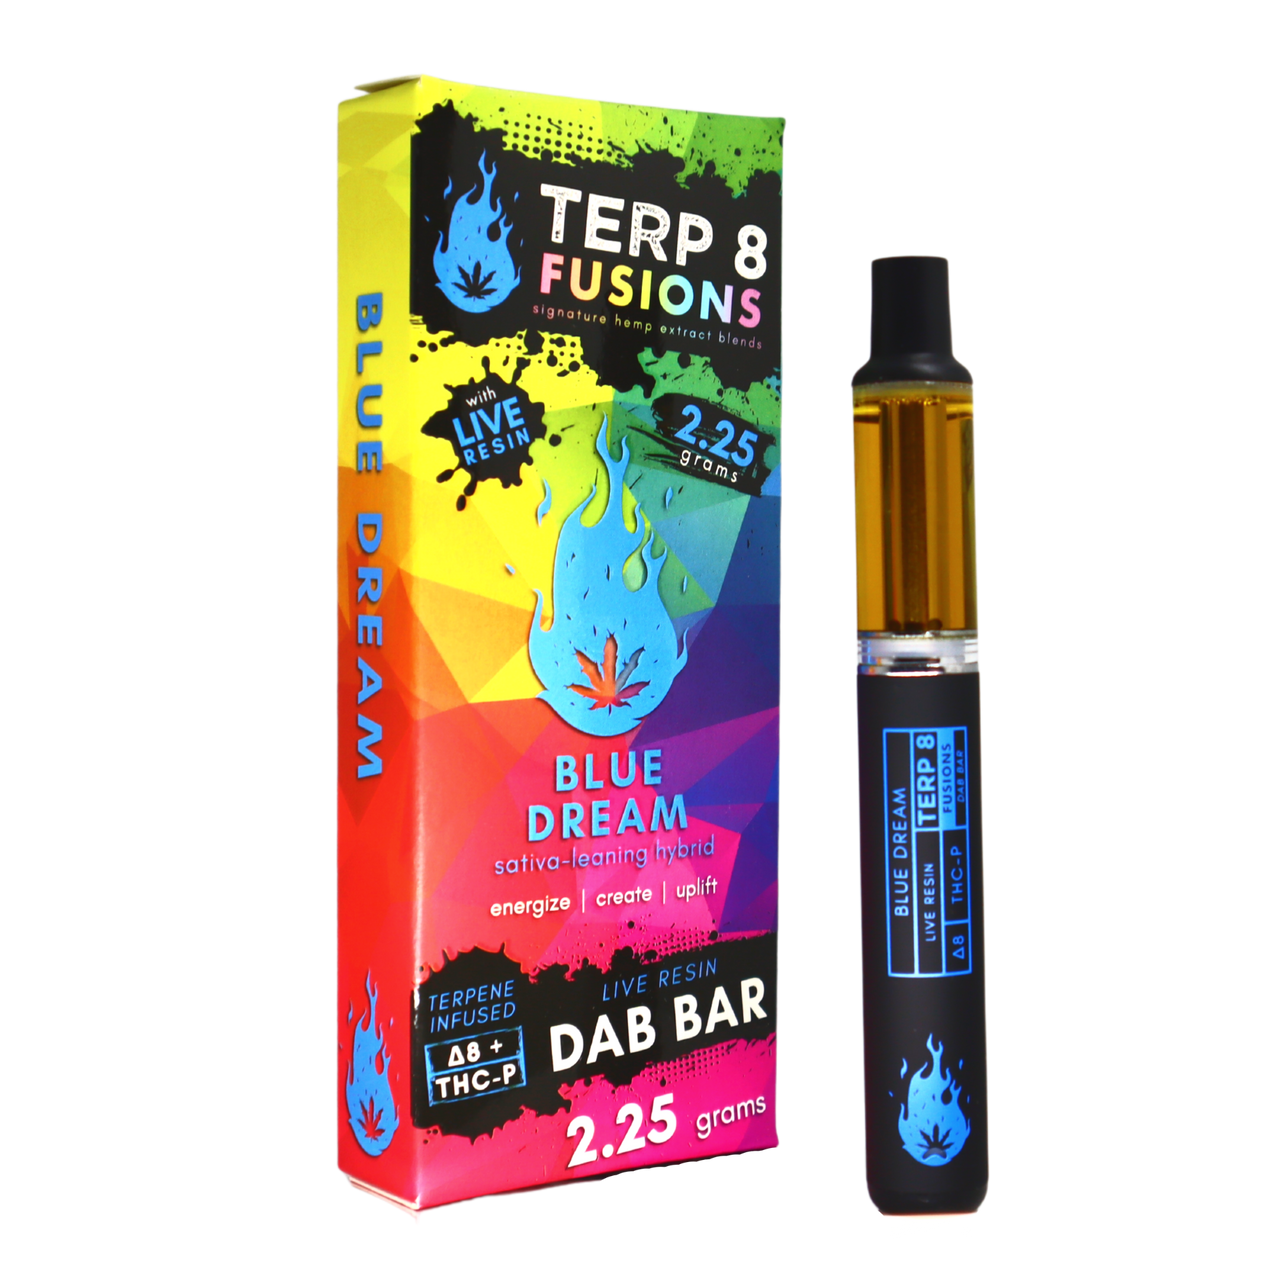 Terp 8 Delta 8 And Thc P Live Resin Disposable Vape Pen Blue Dream 225g